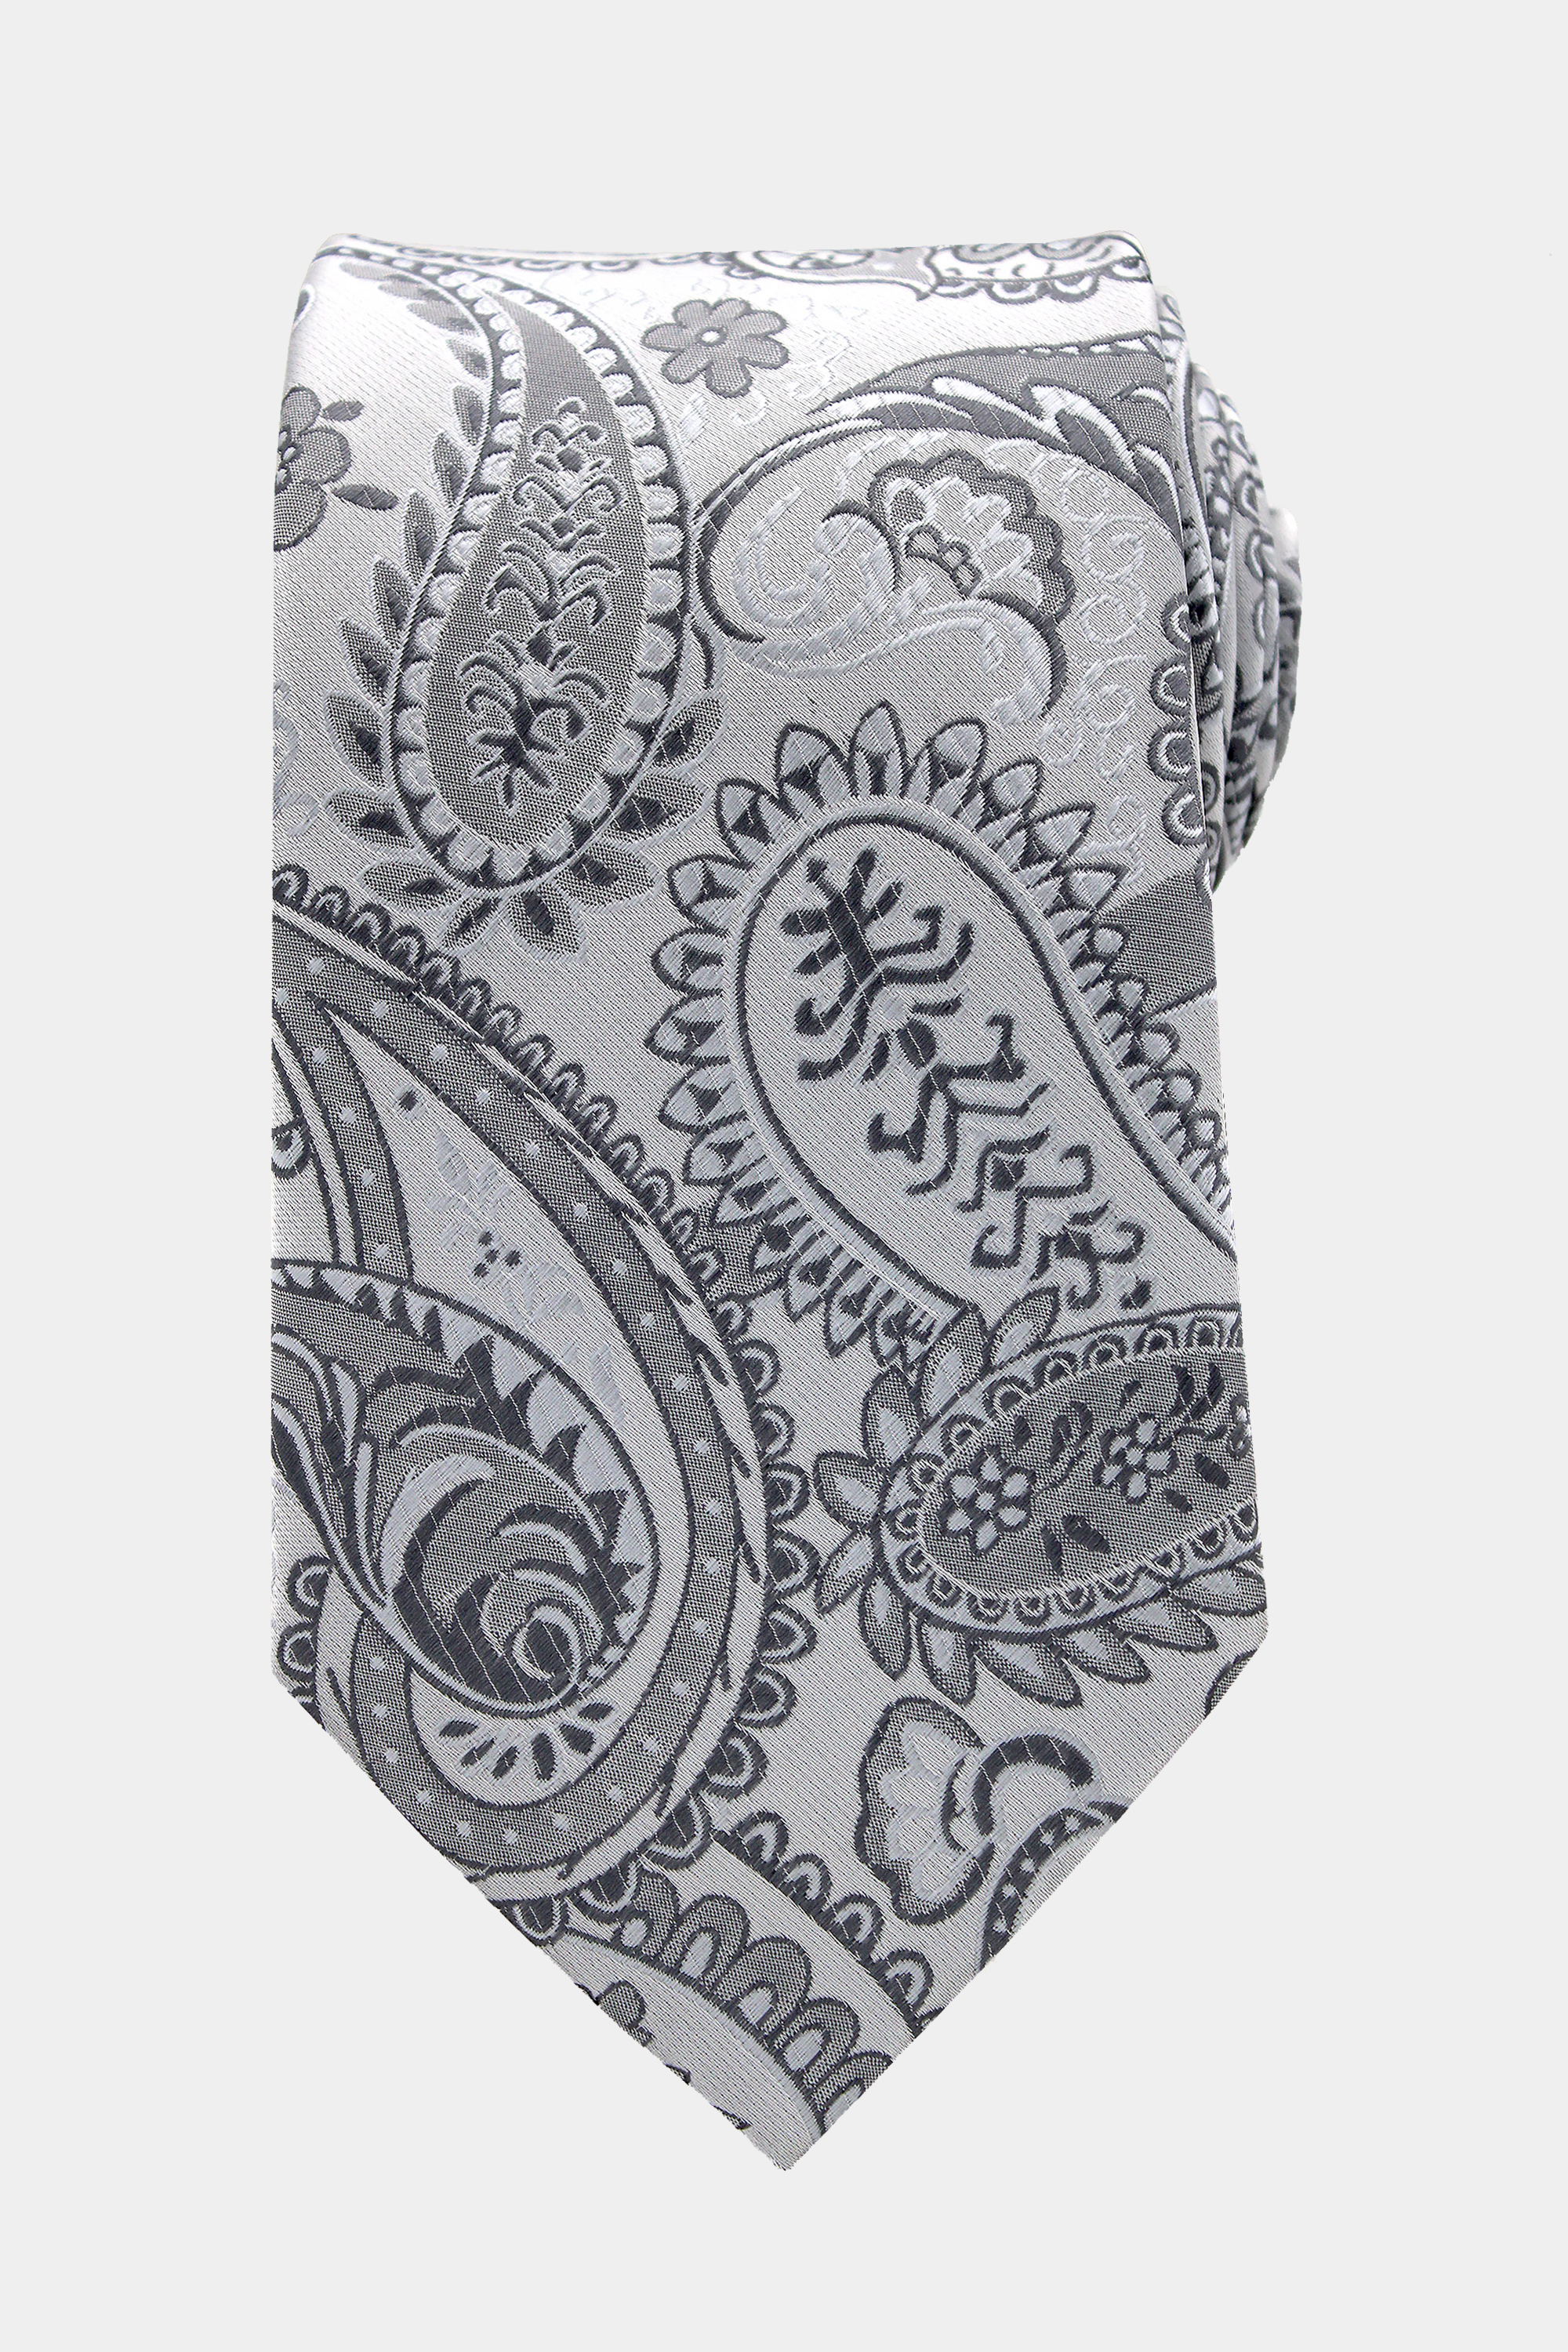 Silver-Paisley-Tie-from-Gentlemansguru.com